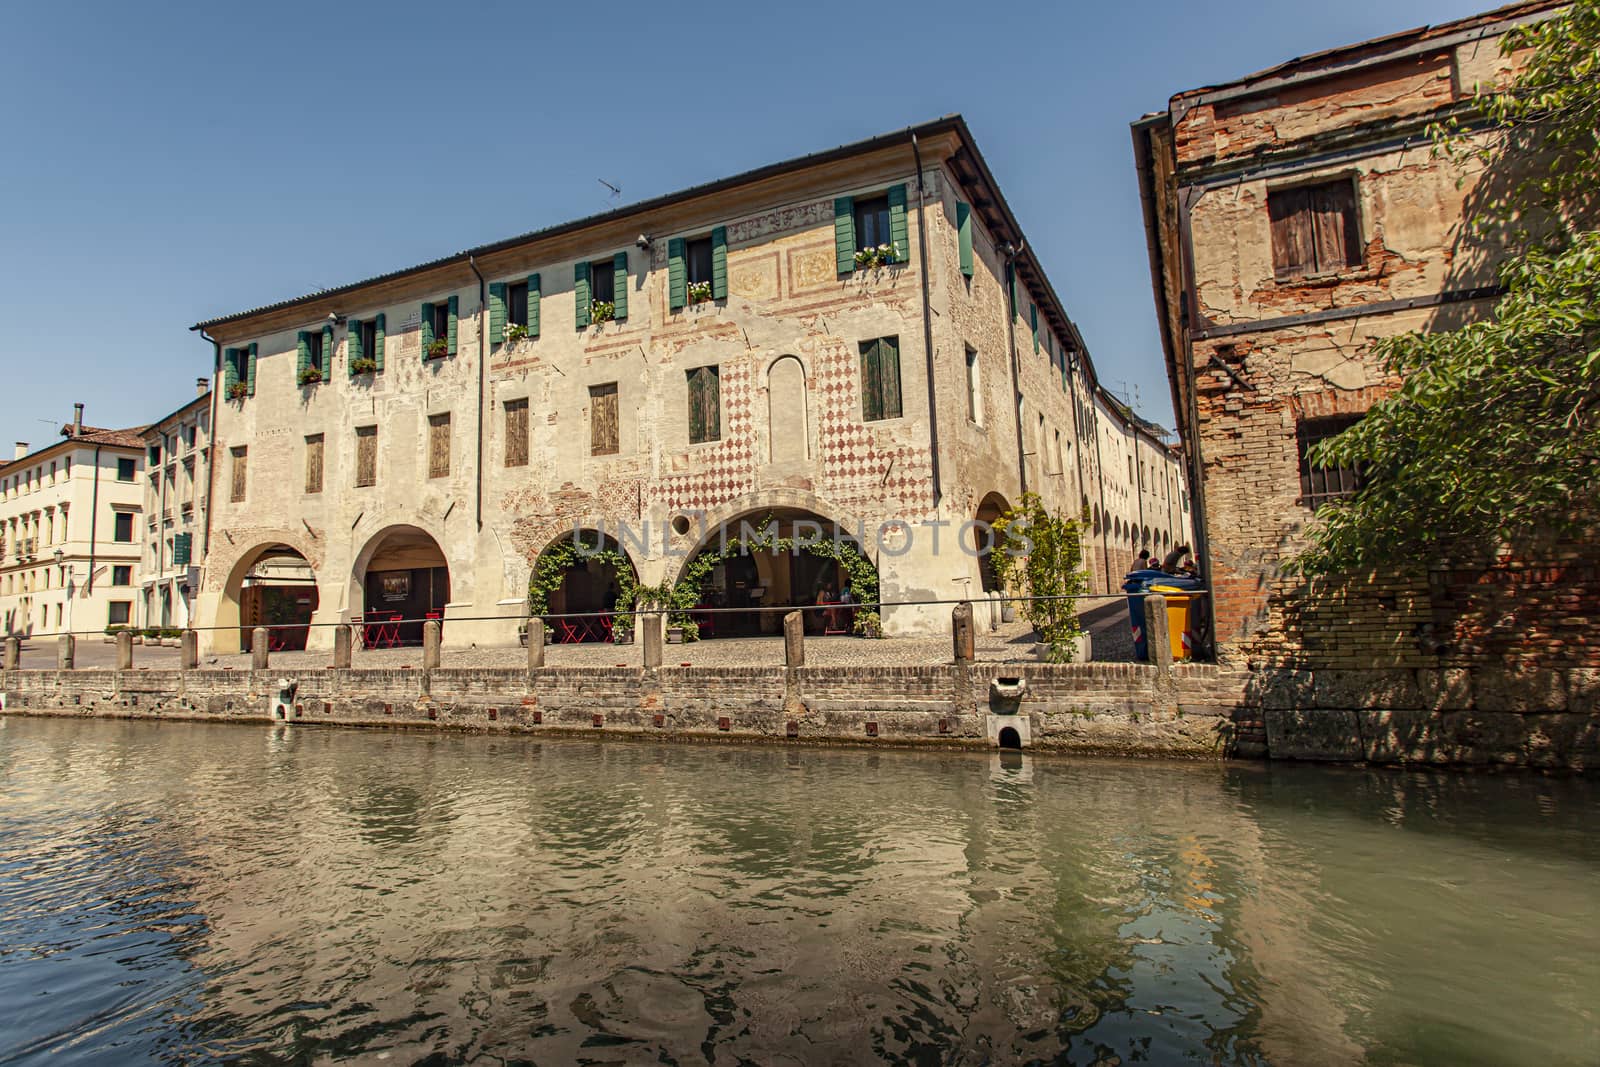 TREVISO, ITALY 13 AUGUST 2020: Isola della pescheria, fish market island in english, in Treviso in Italy